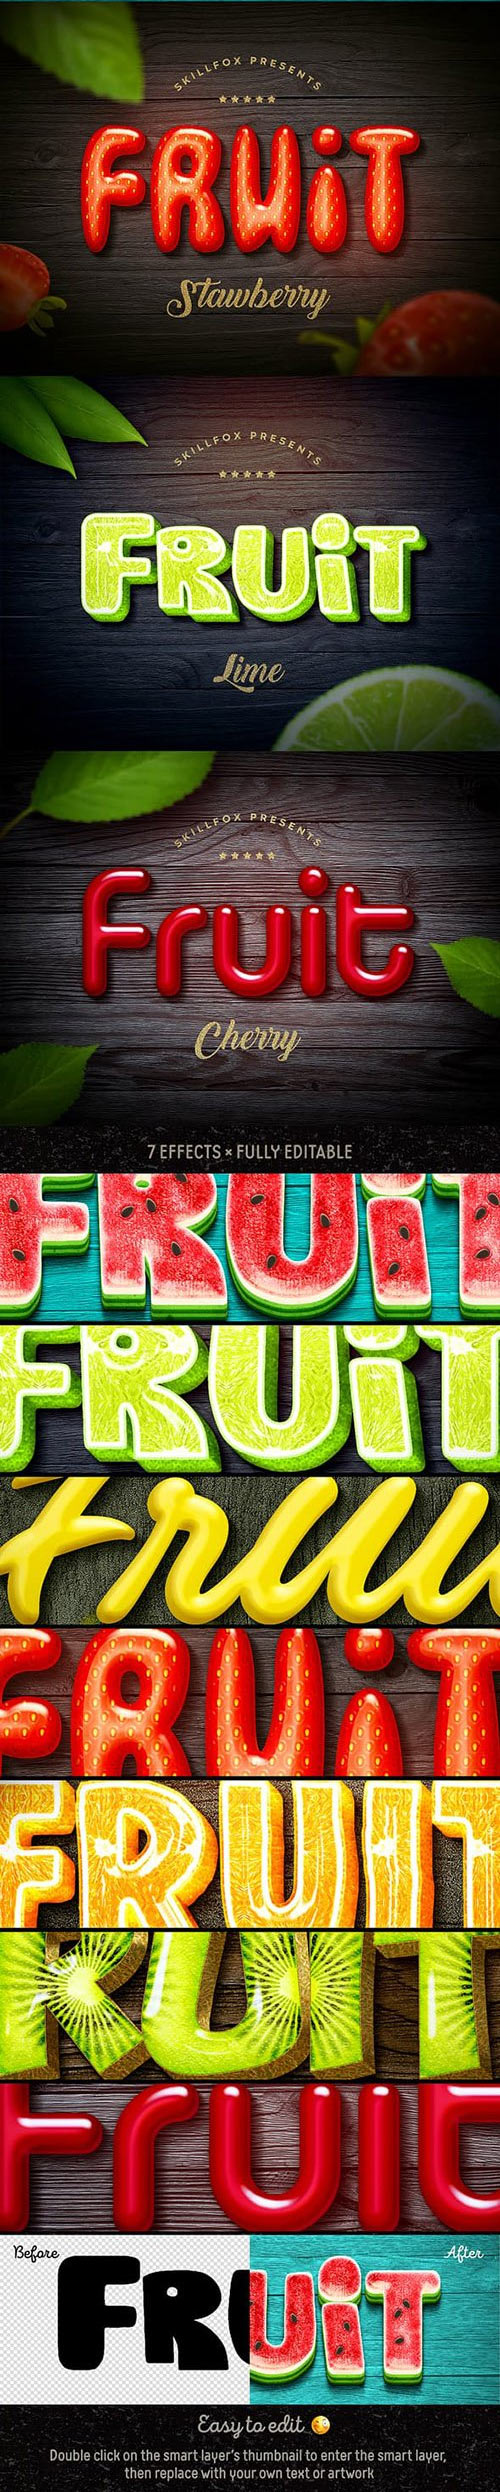 Fruit Text Effects х7 Psd